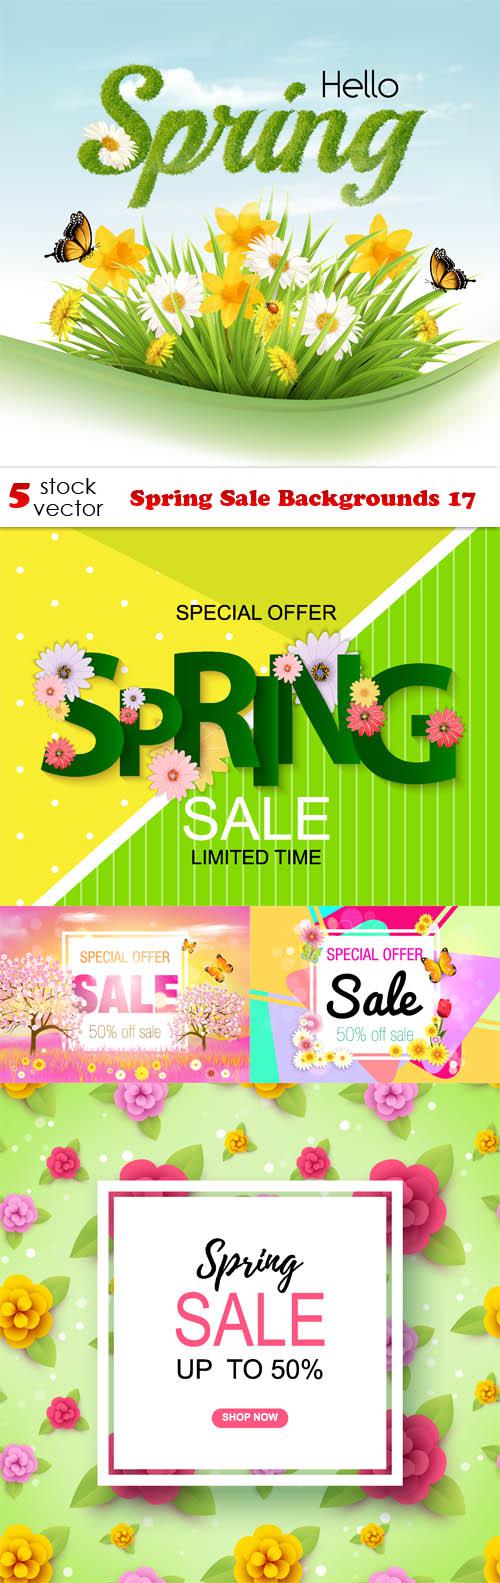 Spring Sale Backgrounds 17